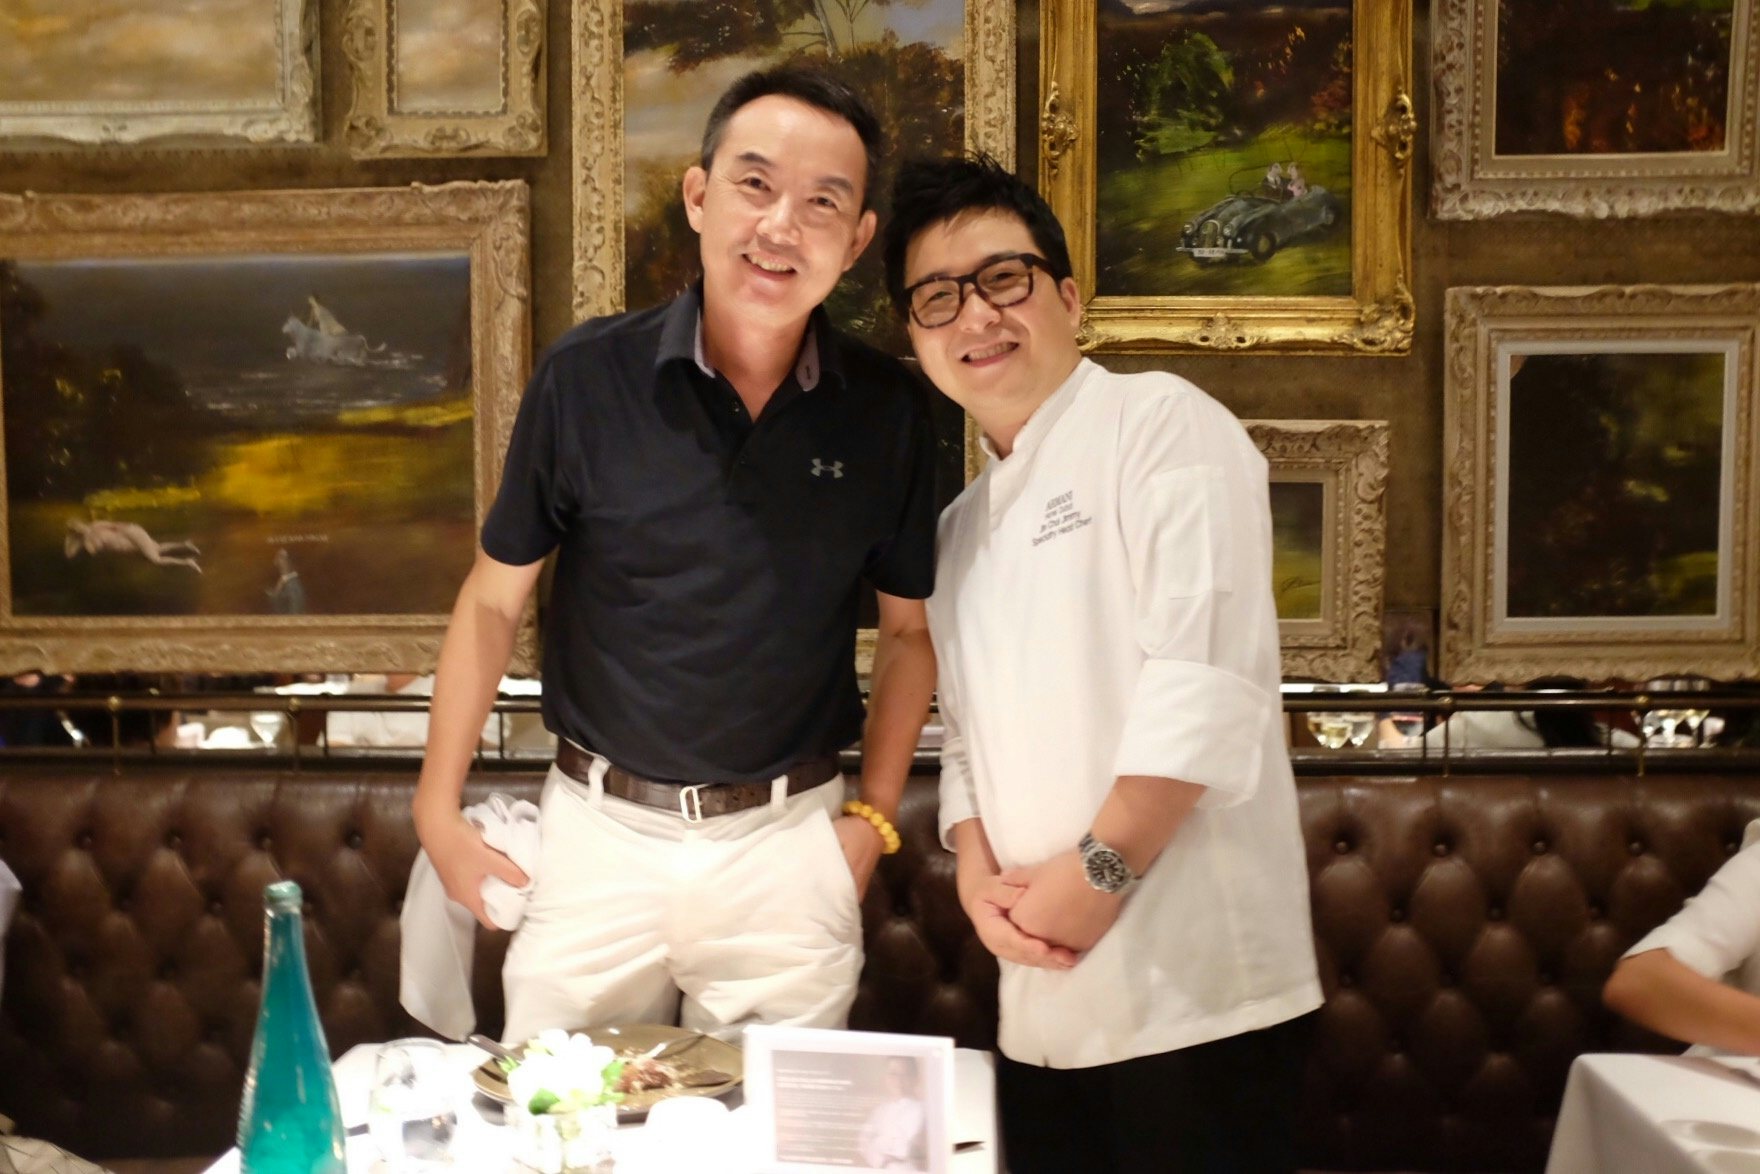 Chef Jin Chul Kim (right) with dinner guest at Kee Club dinner for the Armani Hotel Dubai. Courtesy of Armani Hotel Dubai